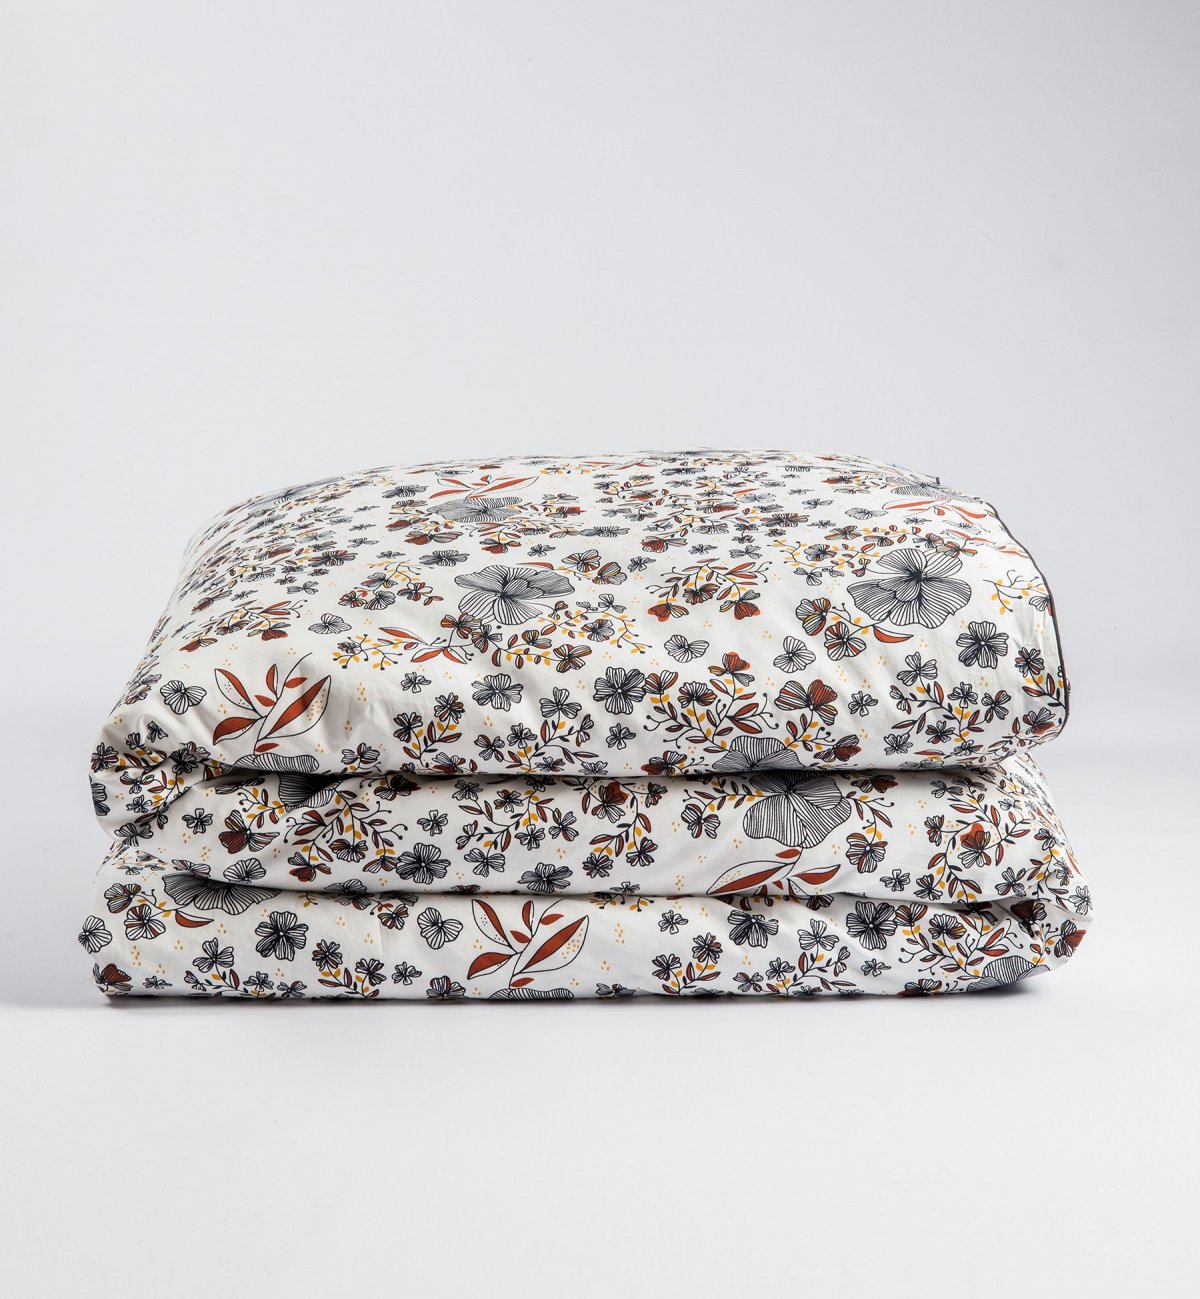 Organic Cotton Flower Duvet Cover for Baby Bed